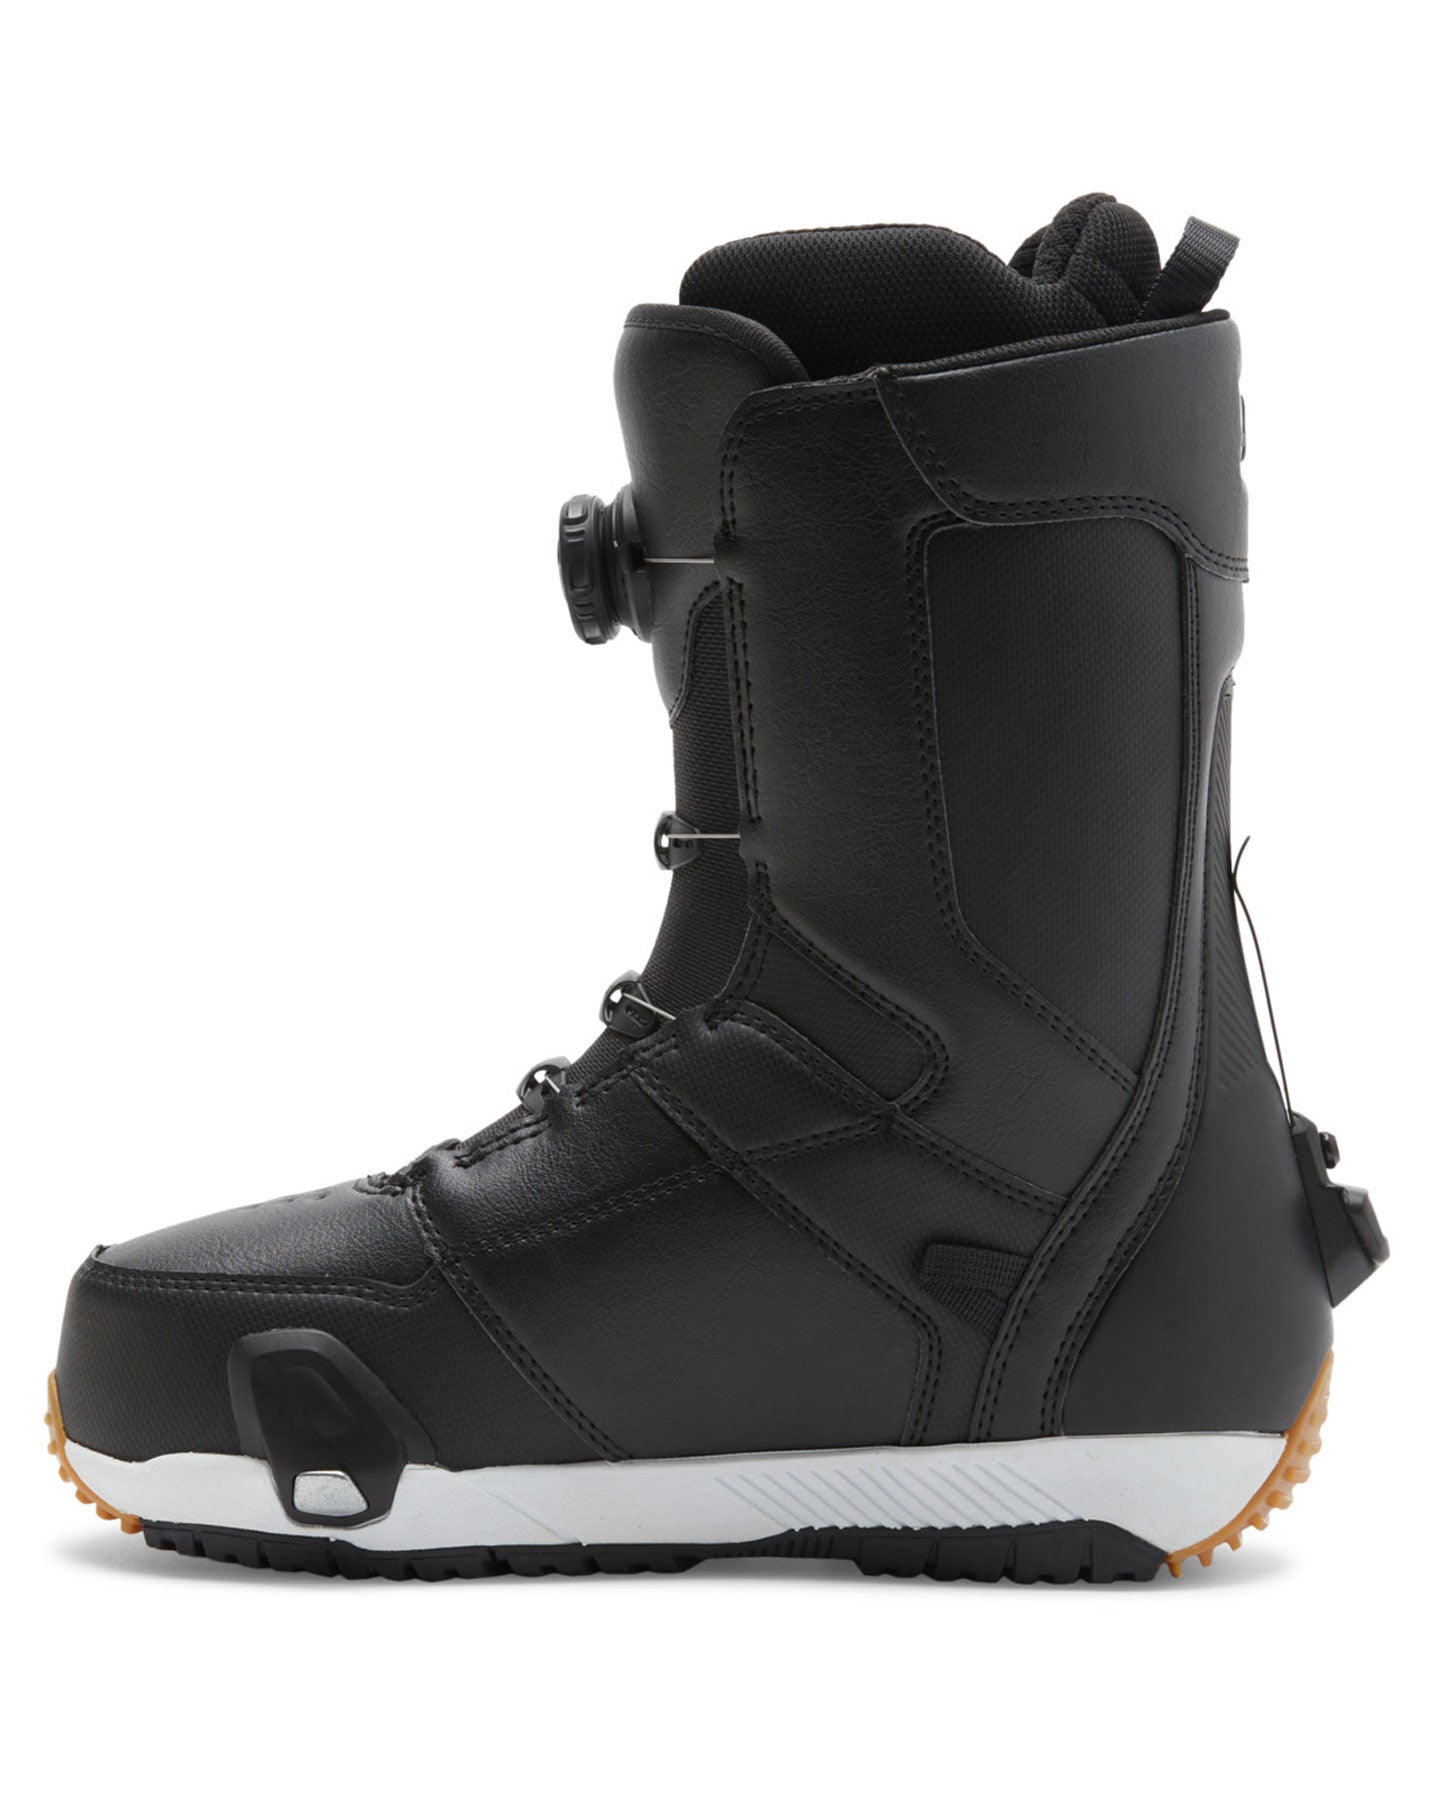 DC Control Step On BOA® Snowboard Boots - Black/White Snowboard Boots - Mens - Trojan Wake Ski Snow